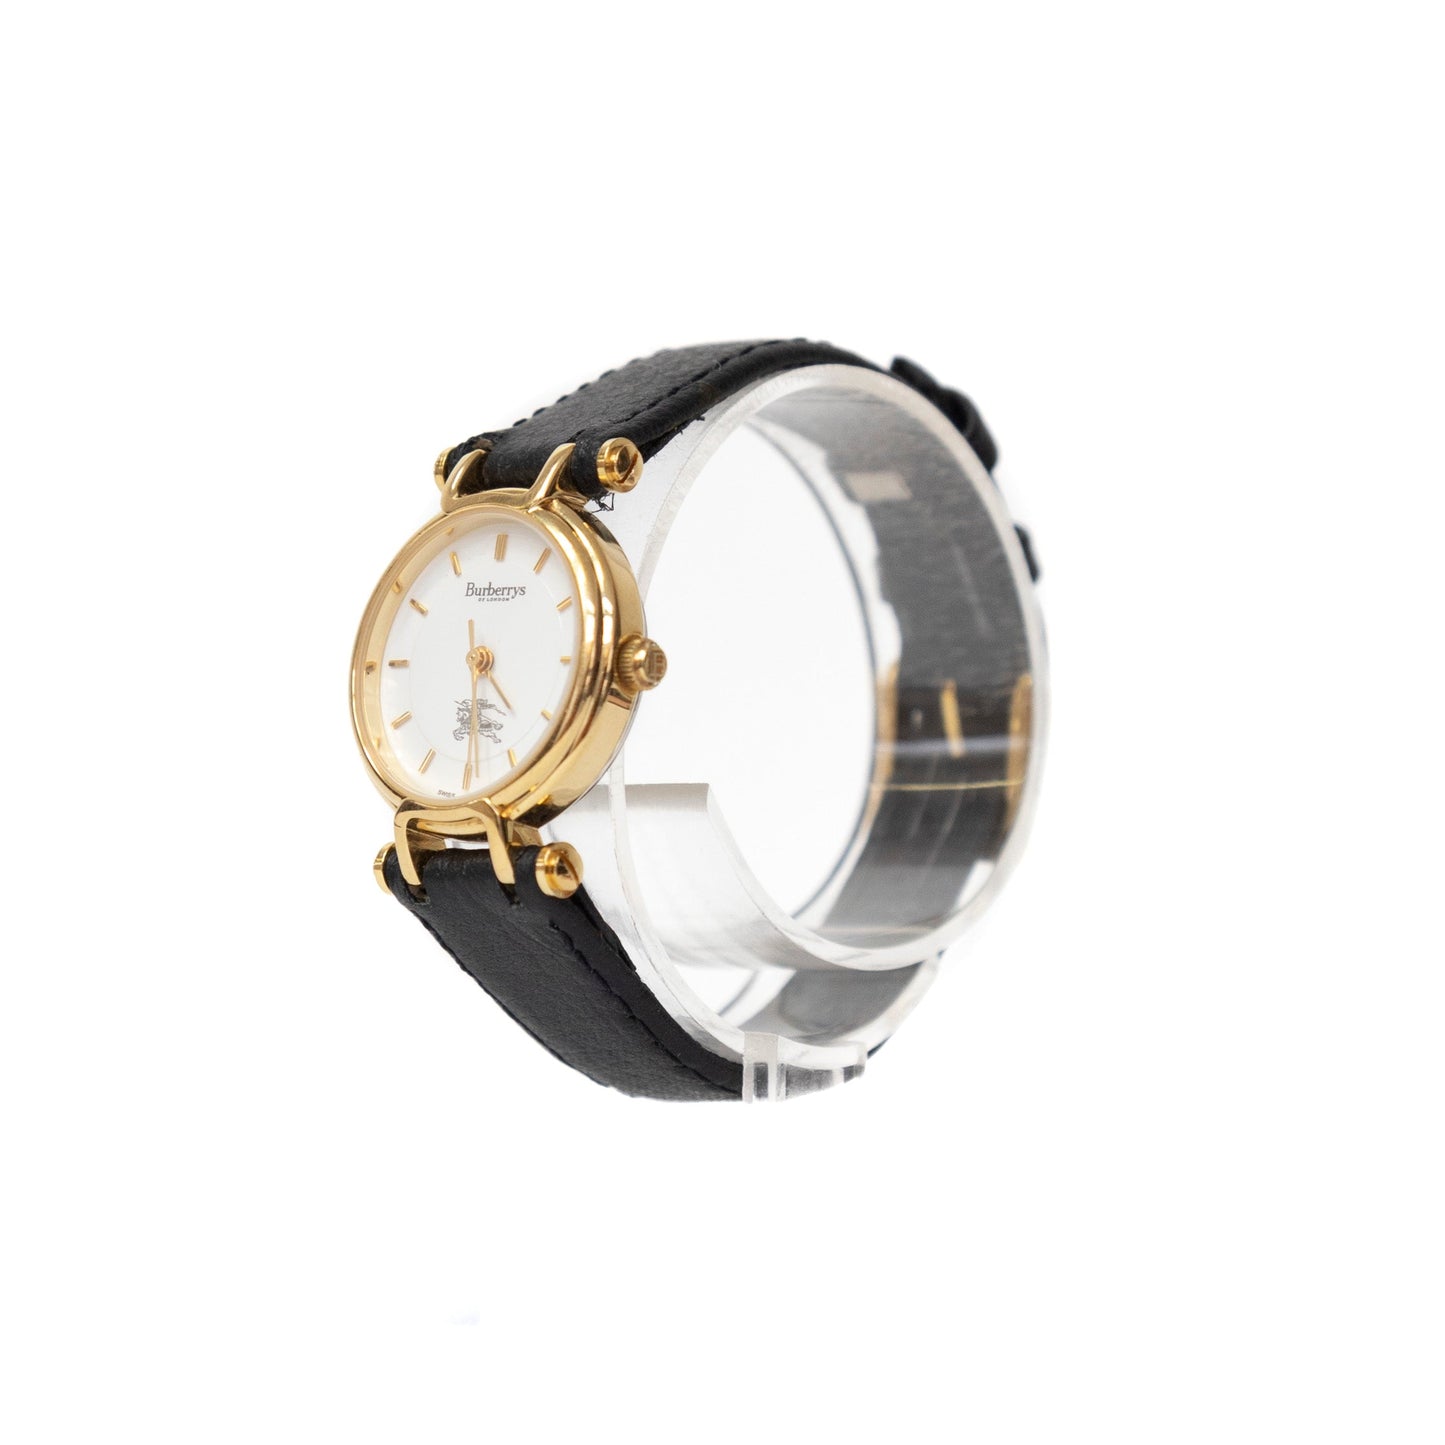 Burberry Model: 3200 Watch